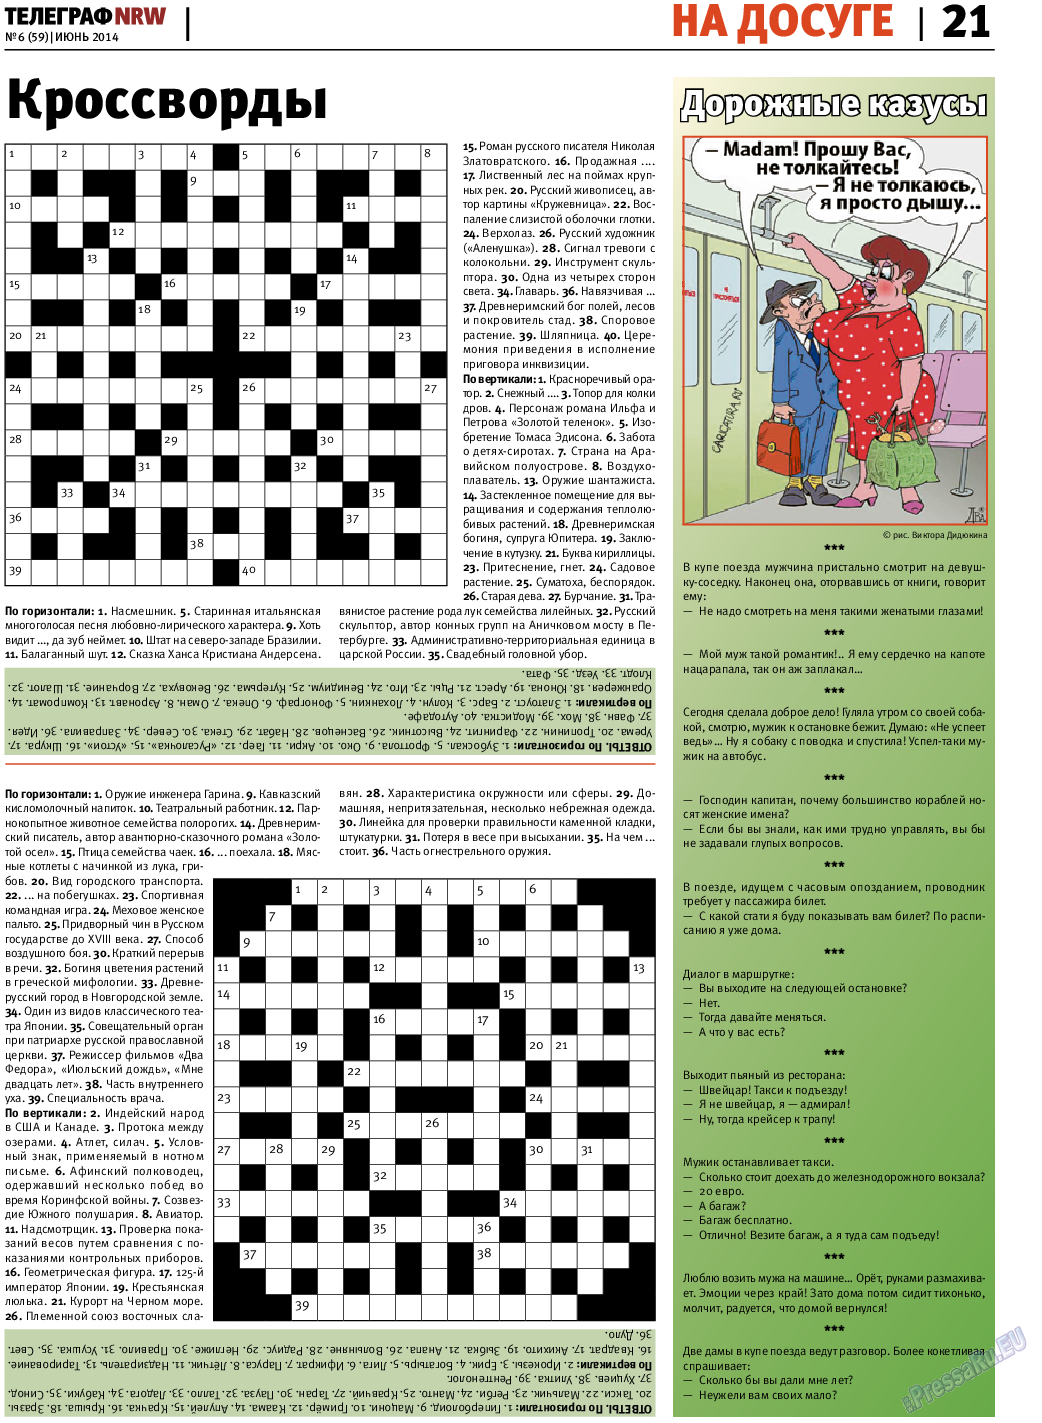 Телеграф NRW, газета. 2014 №6 стр.21